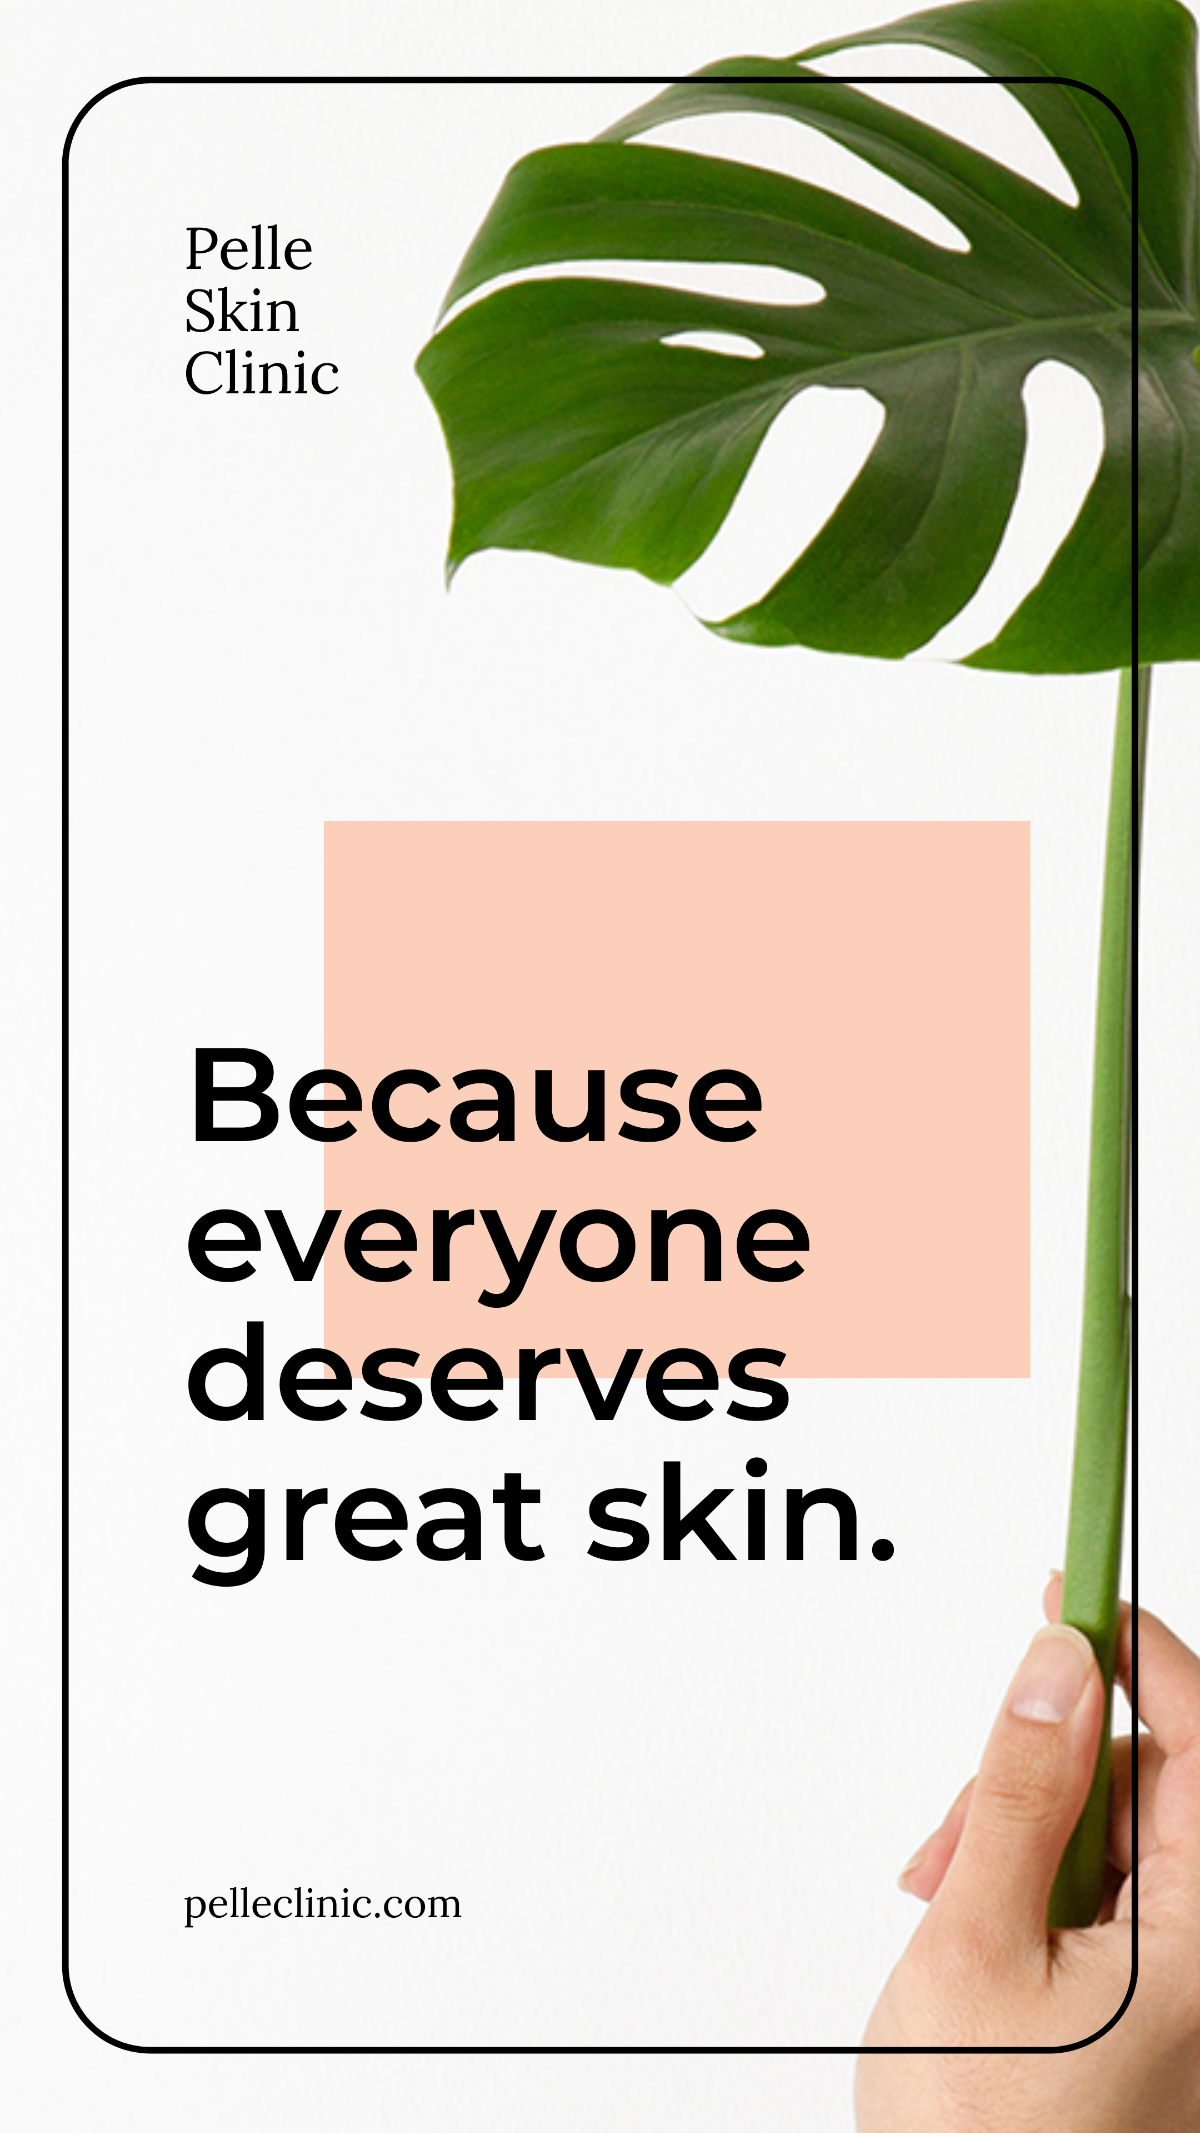 Skin Beauty clinic Whatsapp Post Template